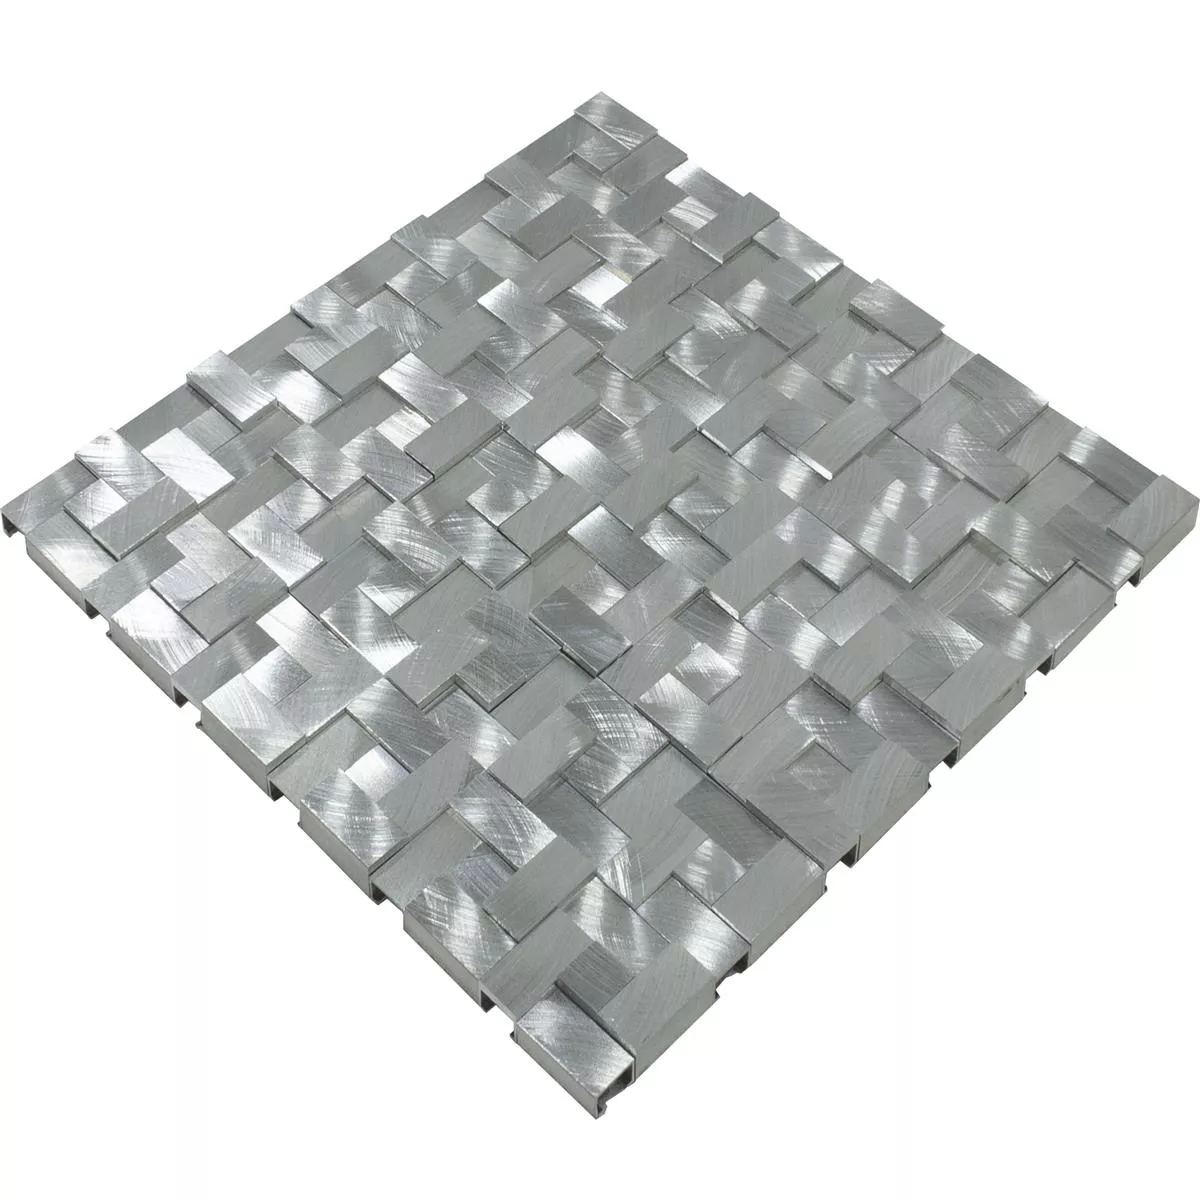 Auminio Metal Azulejos De Mosaico Quantum Plateado